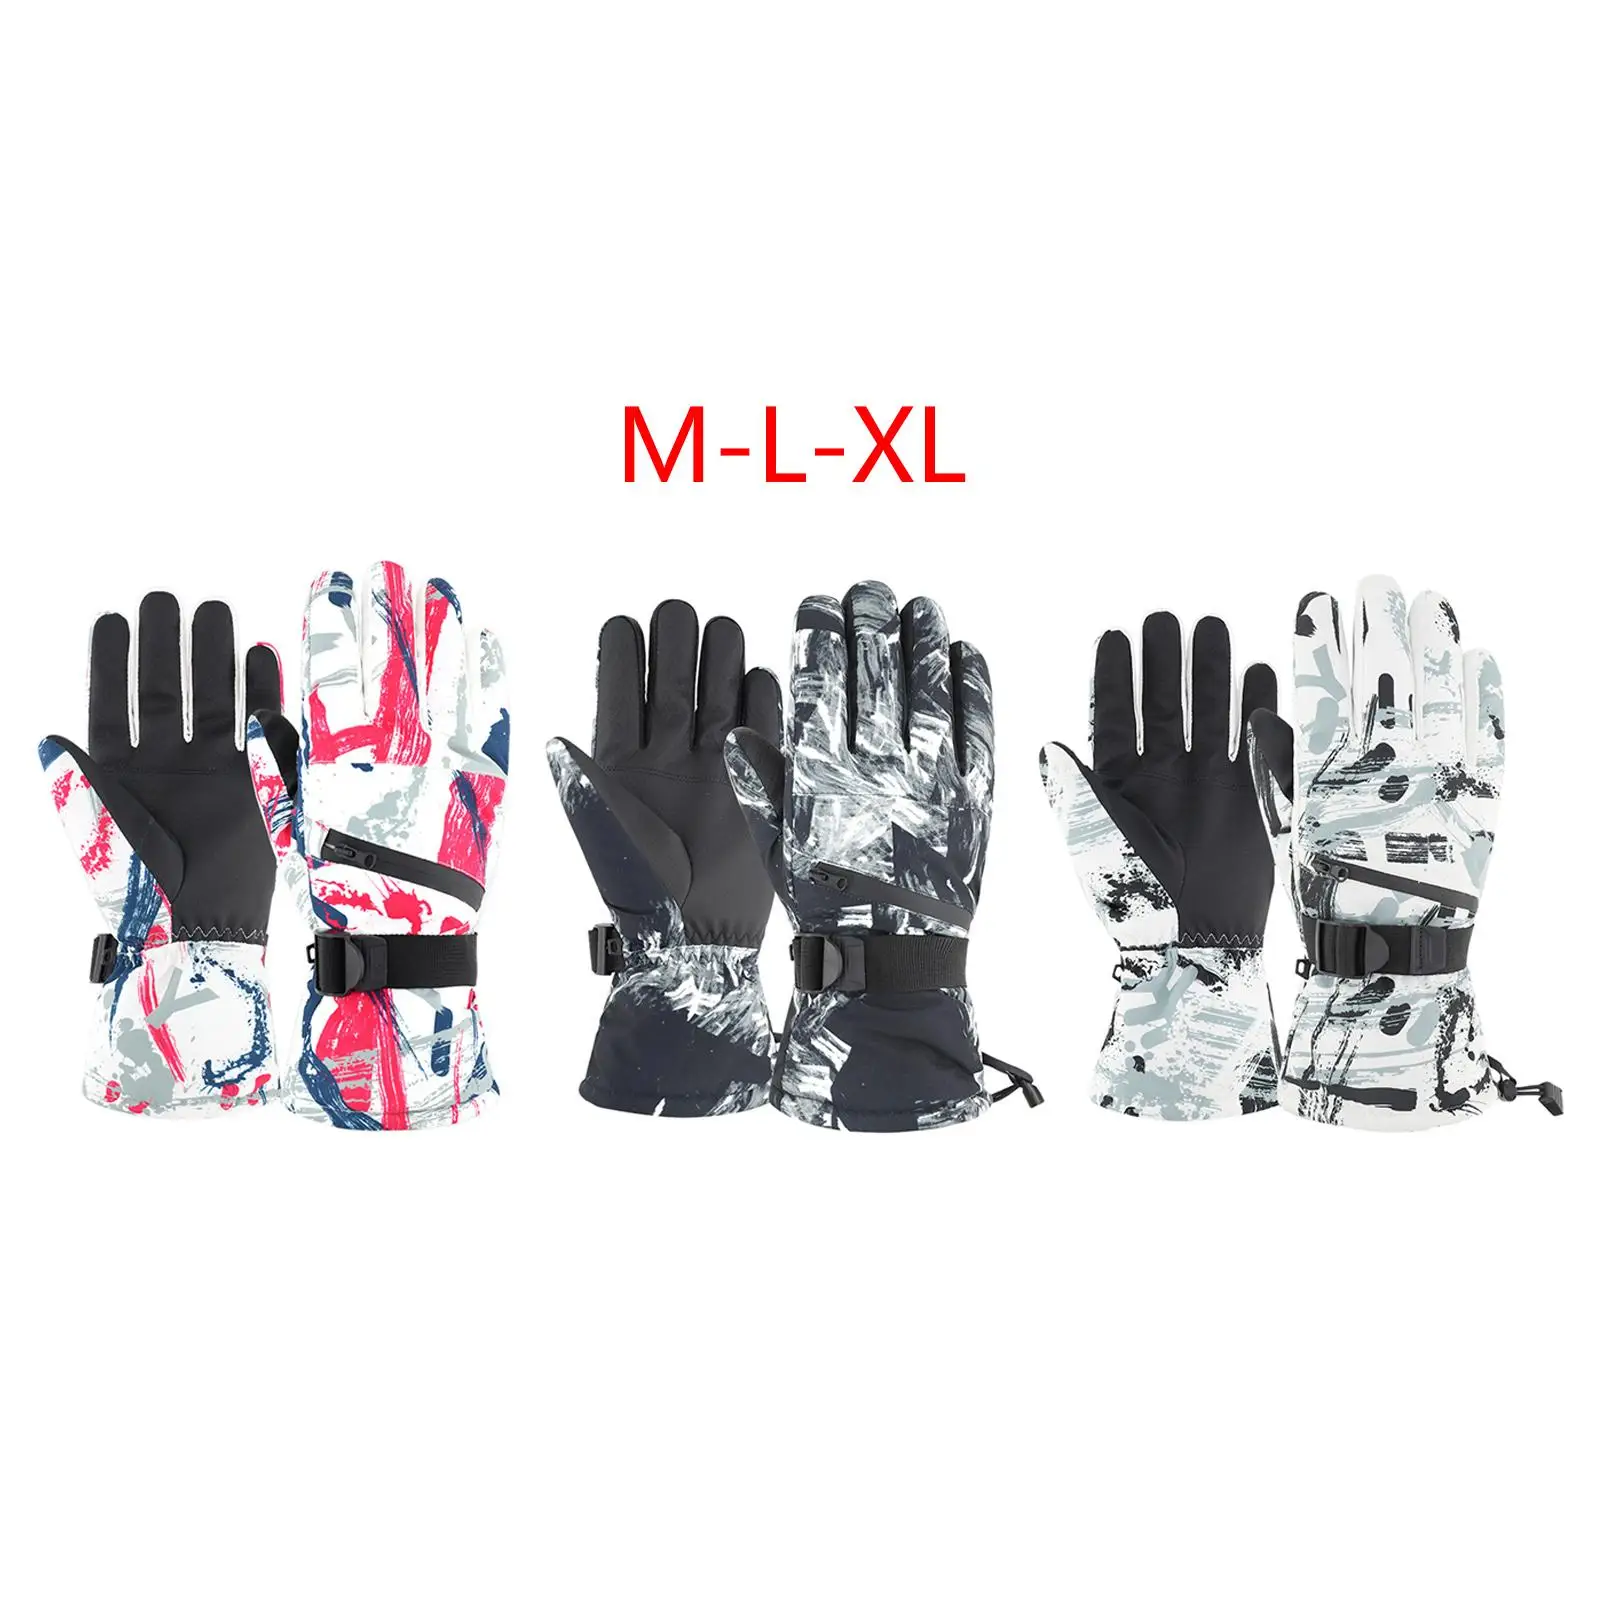 Ski Gloves Waterproof Touchscreen Snowboard Gloves, Warm Winter   Weather, Fits Both 